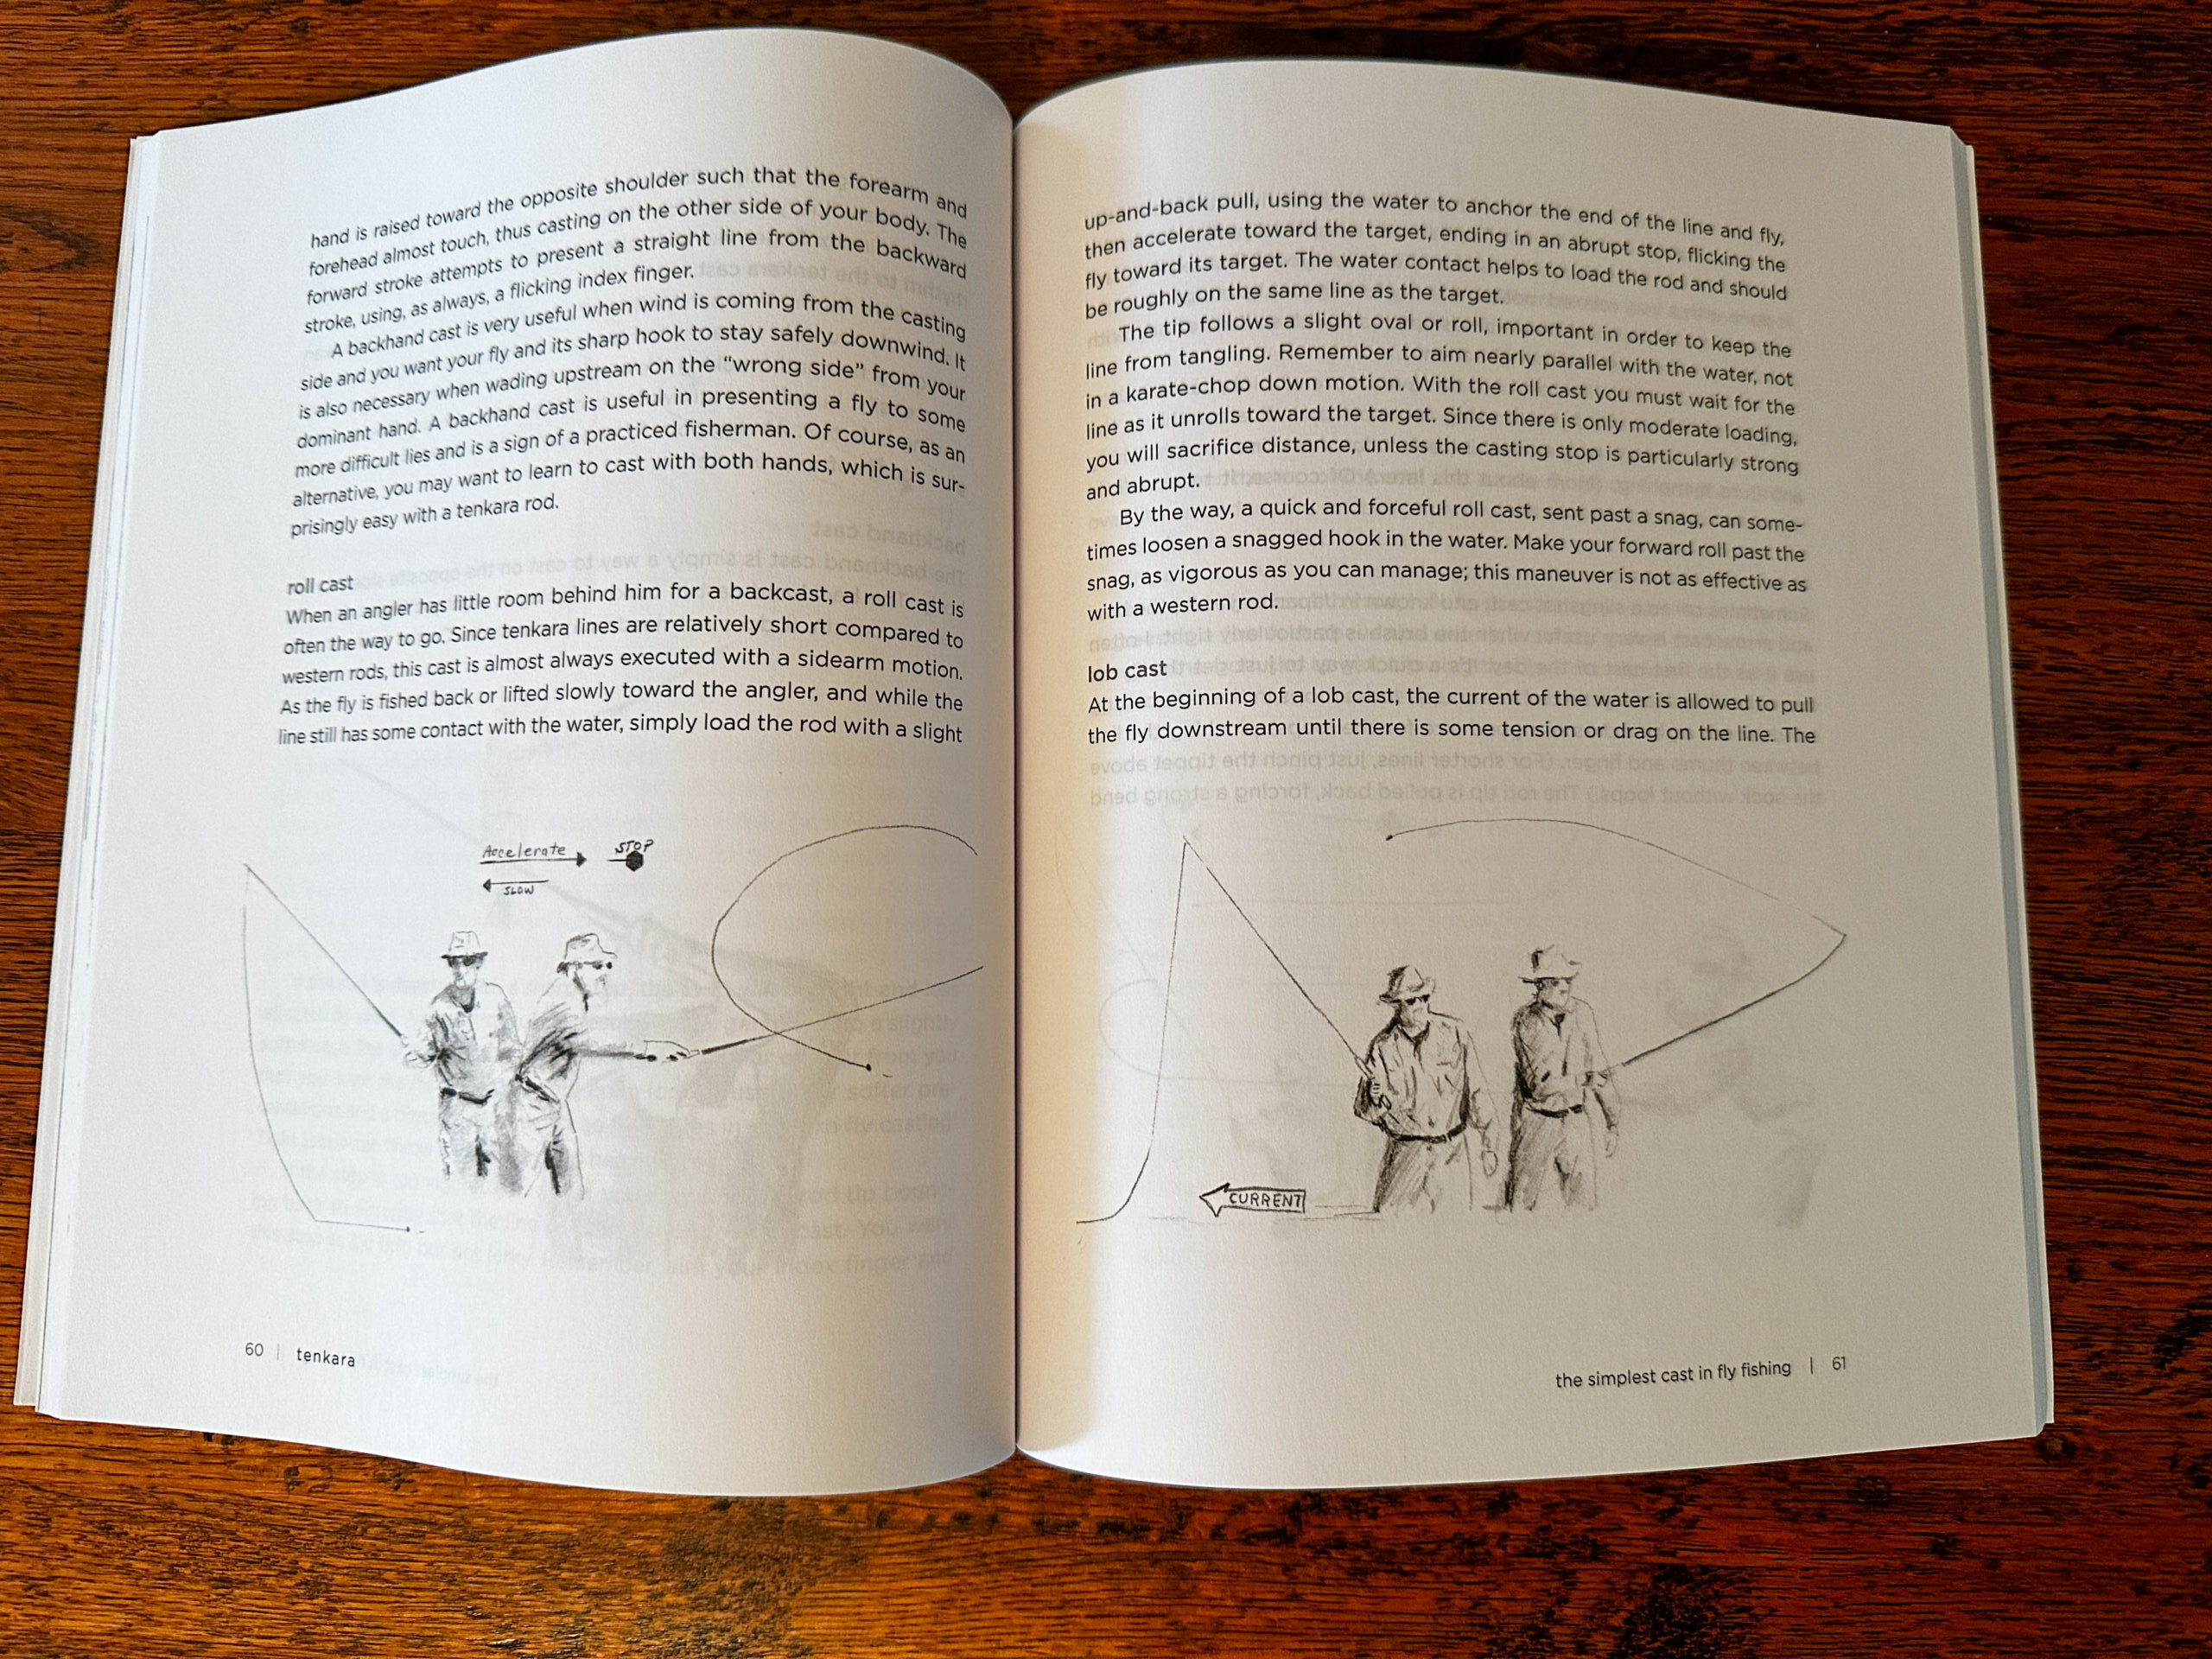 Drawings in the book Tenkara